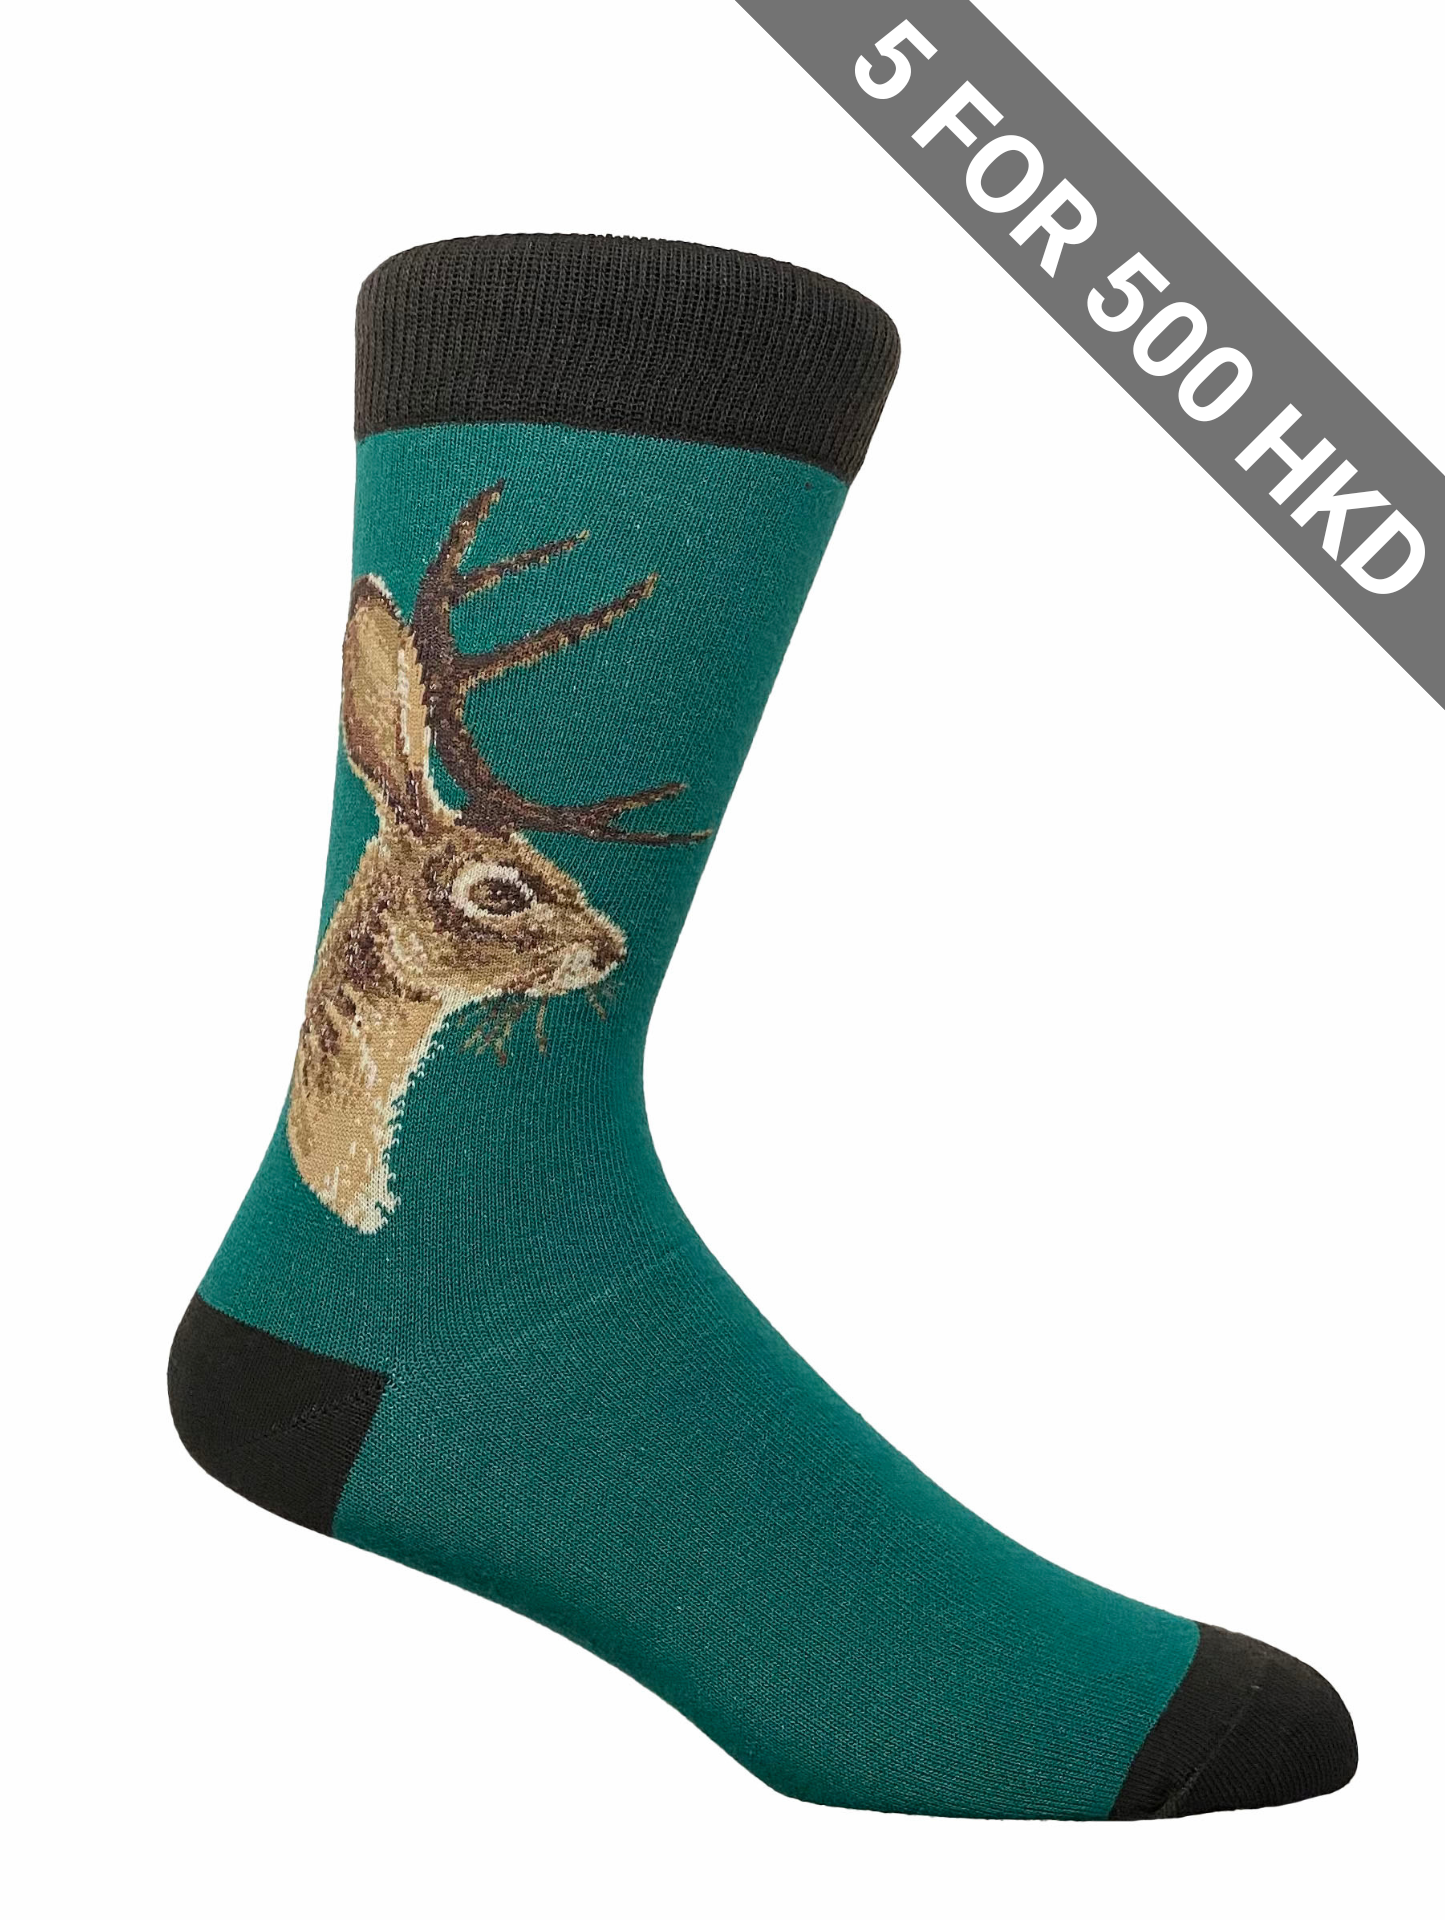 Socks | Green | Hare | Cotton